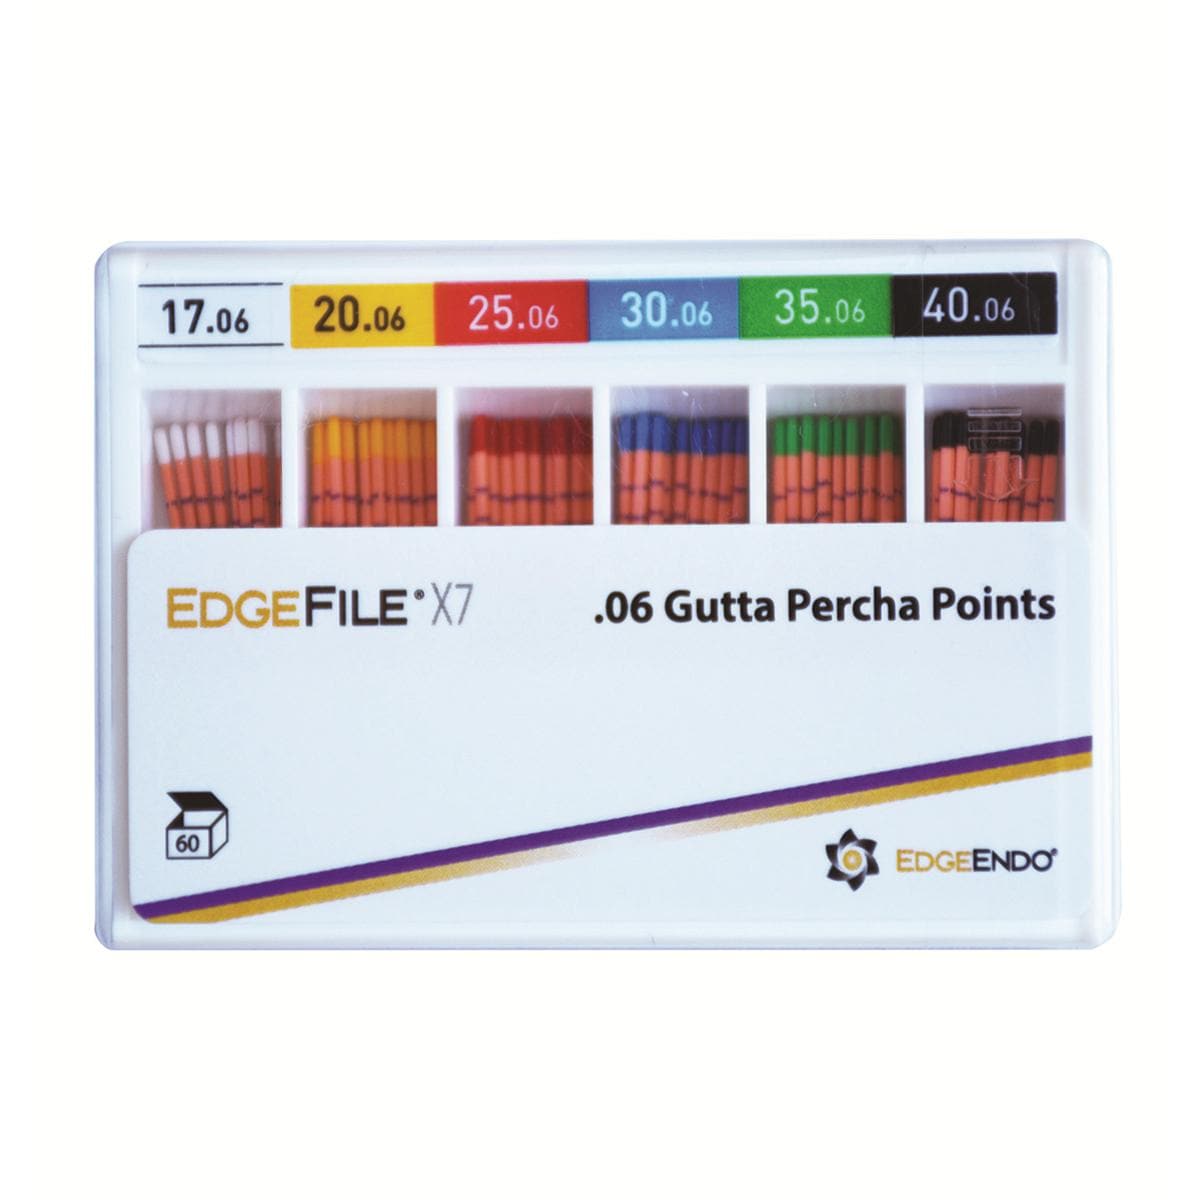 Edge X7 Gutta Percha Points 40.06 60pk